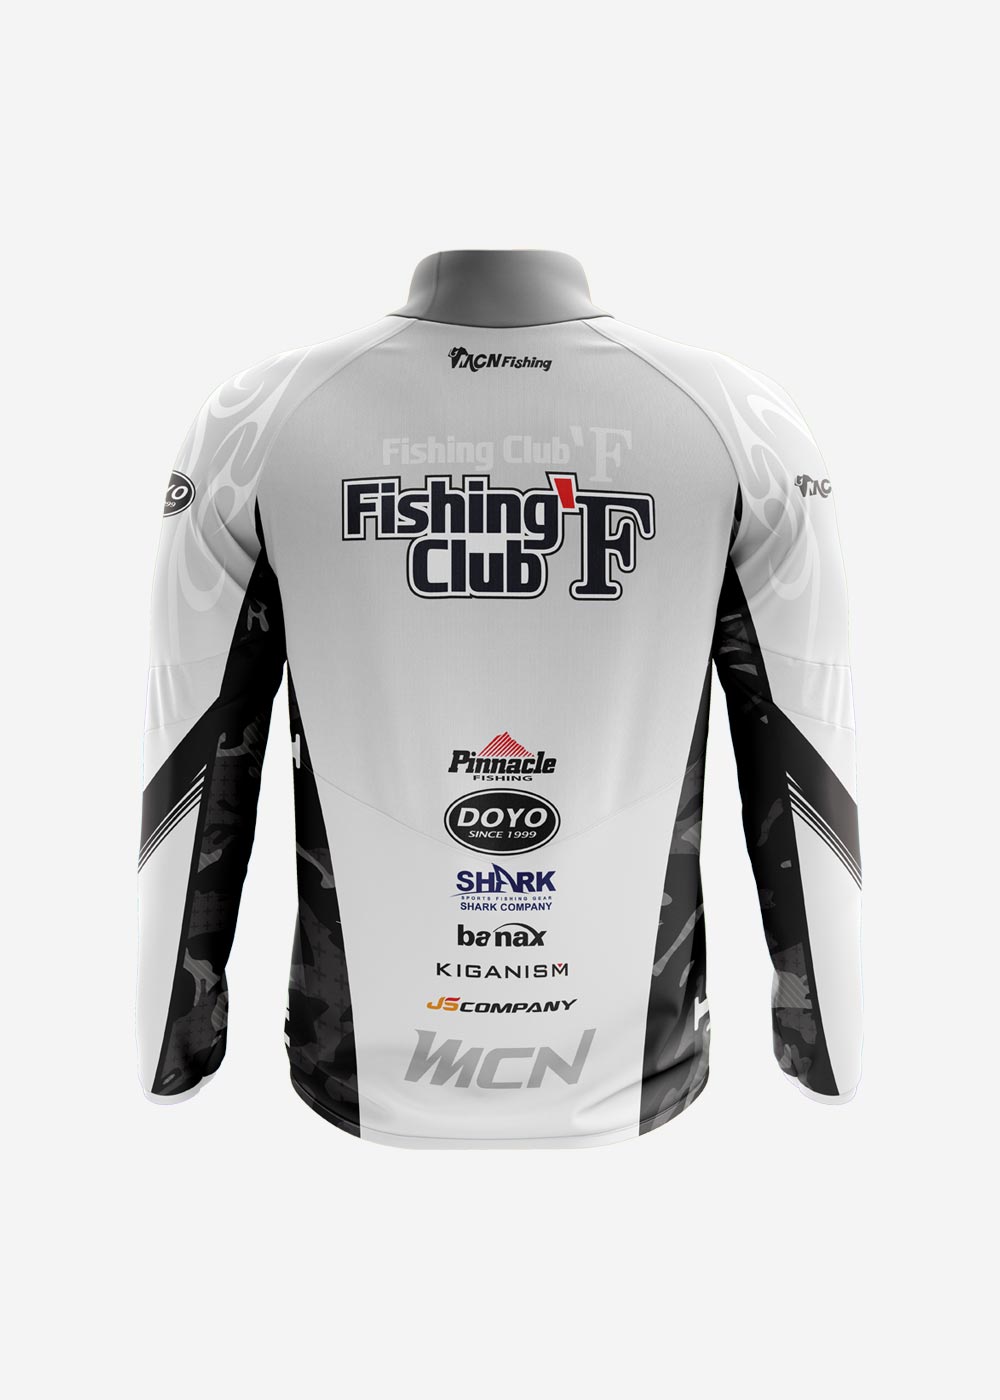 mcnfishing[커스텀] 팀 피싱 클럽 F 낚시단체복 져지 (ver.카모)